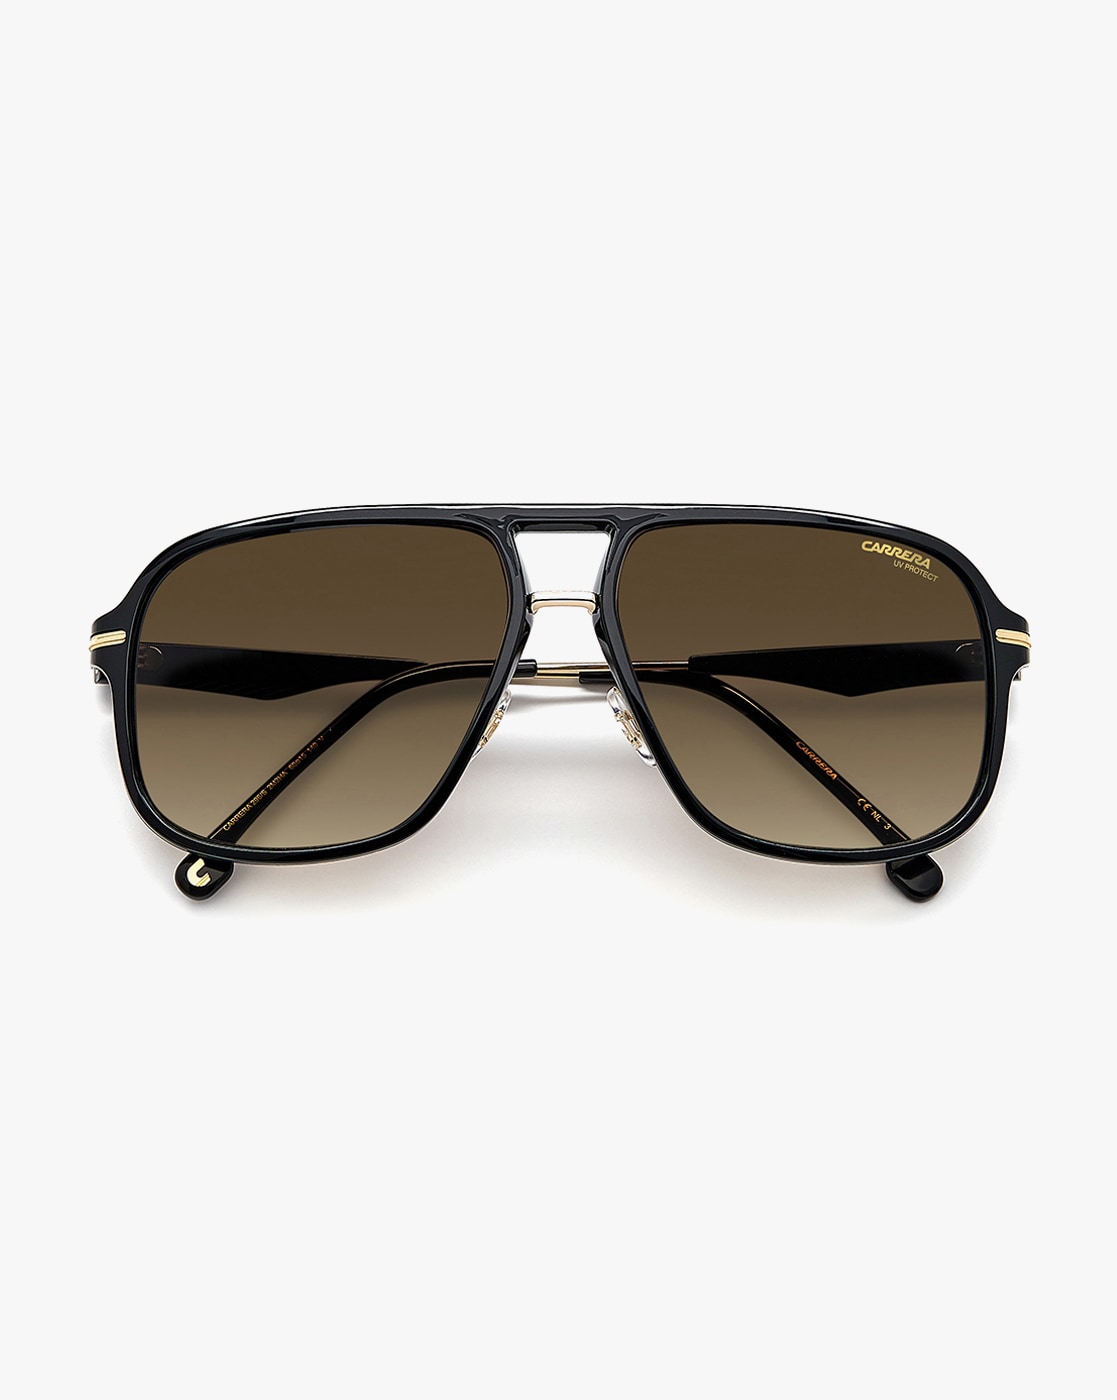 CARRERA Sunglasses for Men Driving Men's 12MM 62MM 132MM - AliExpress